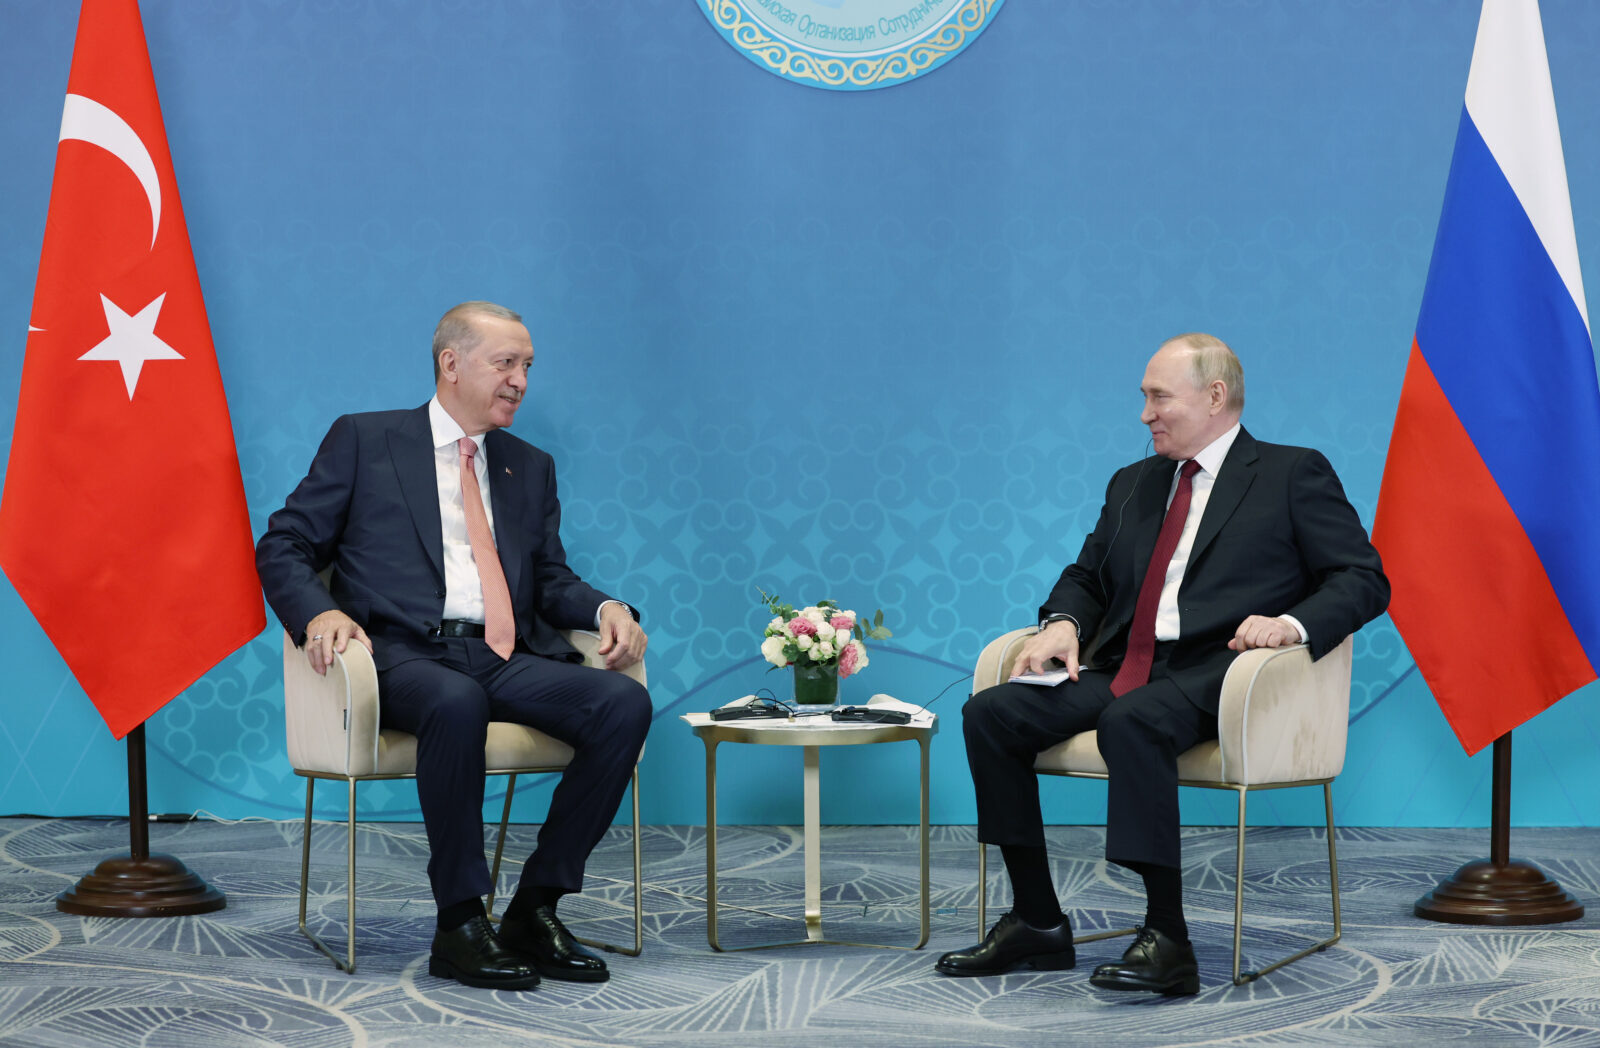 Erdogan, Putin forge alliance amid rising tensions